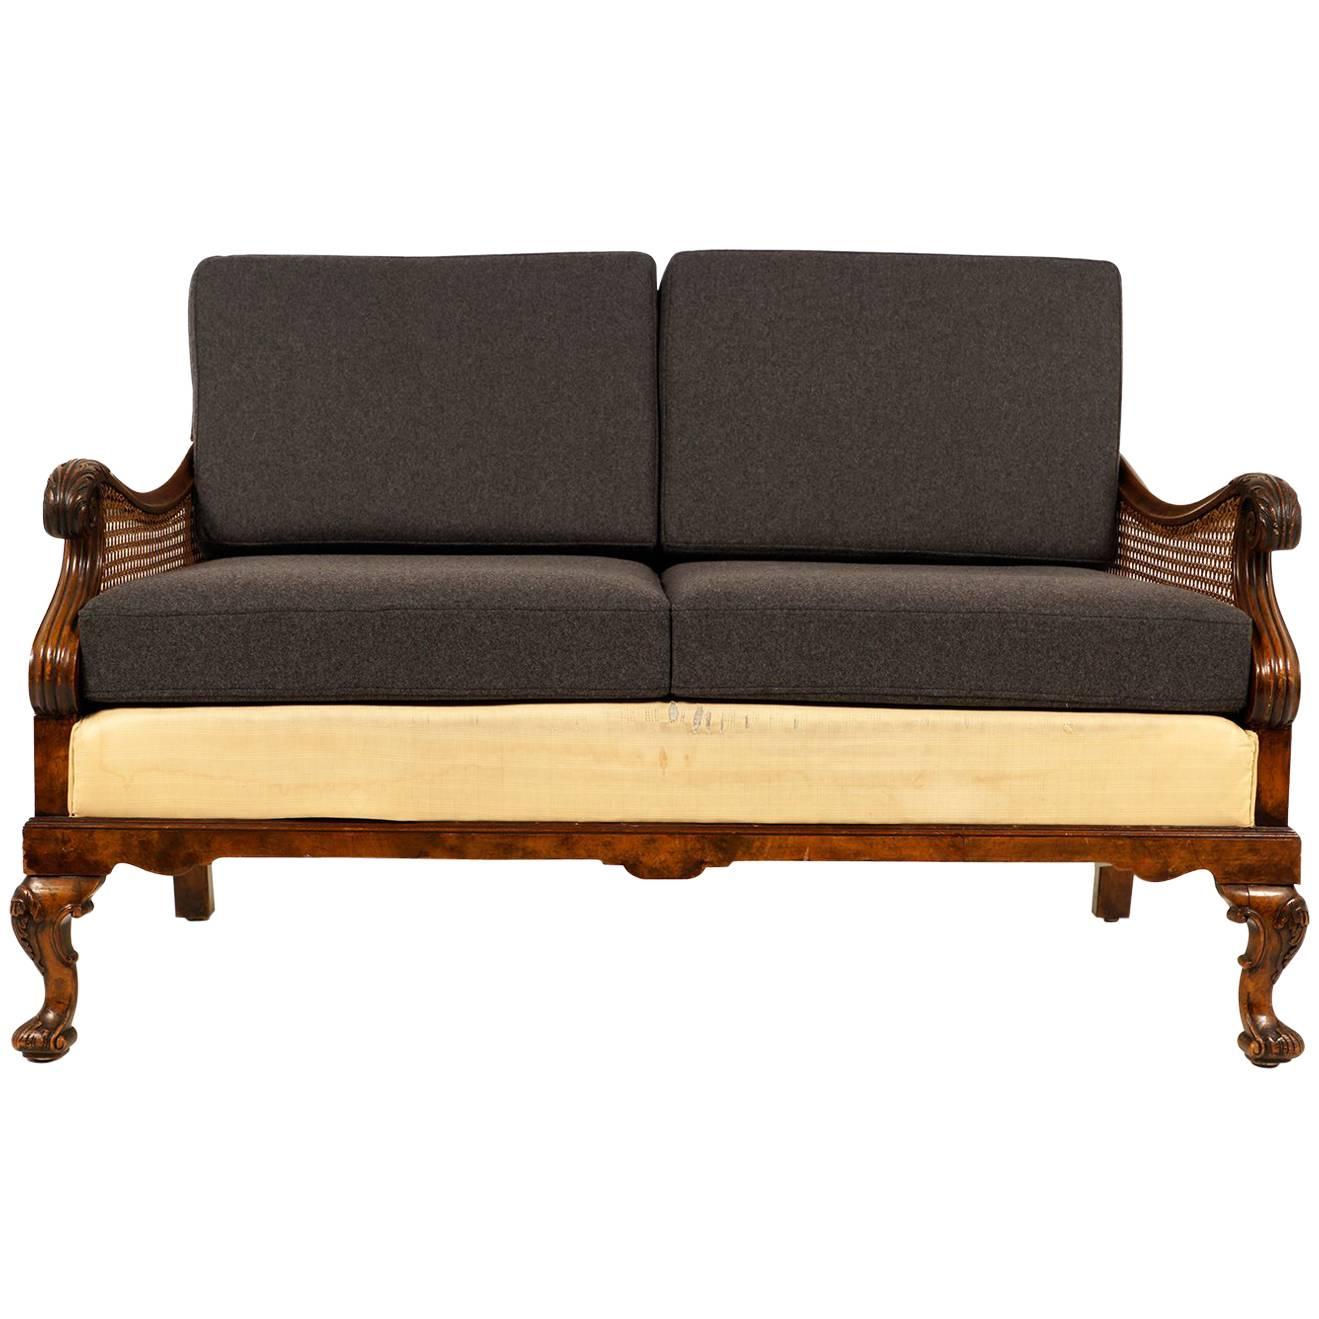 Vintage French Cane Sofa